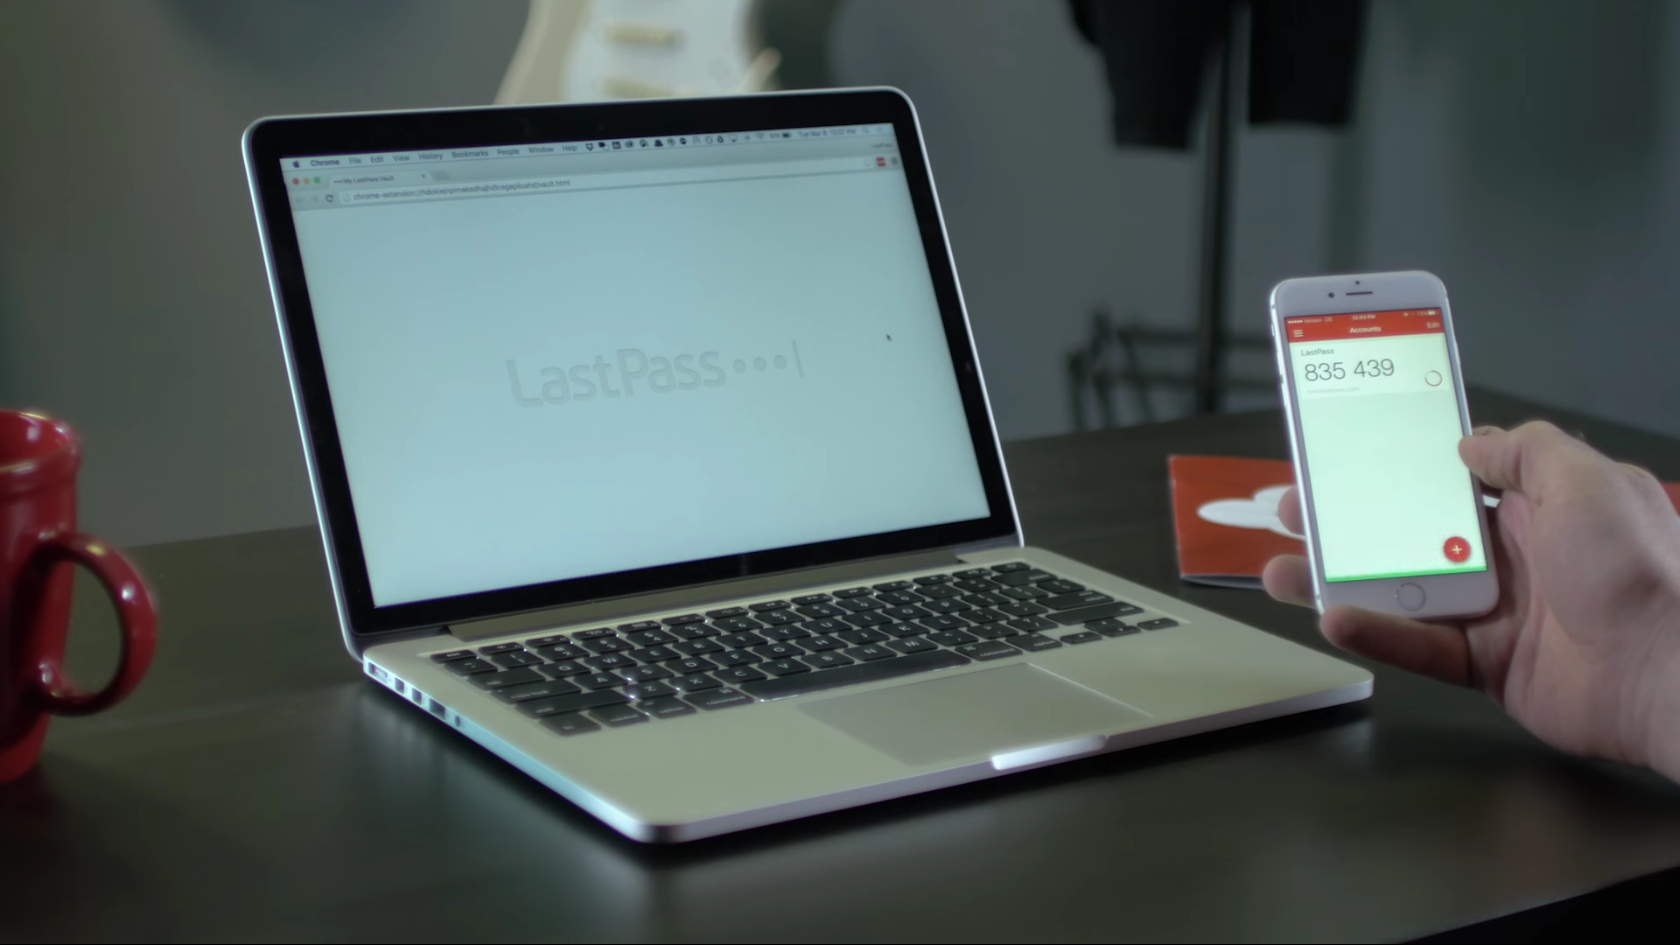 LastPass Authenticator